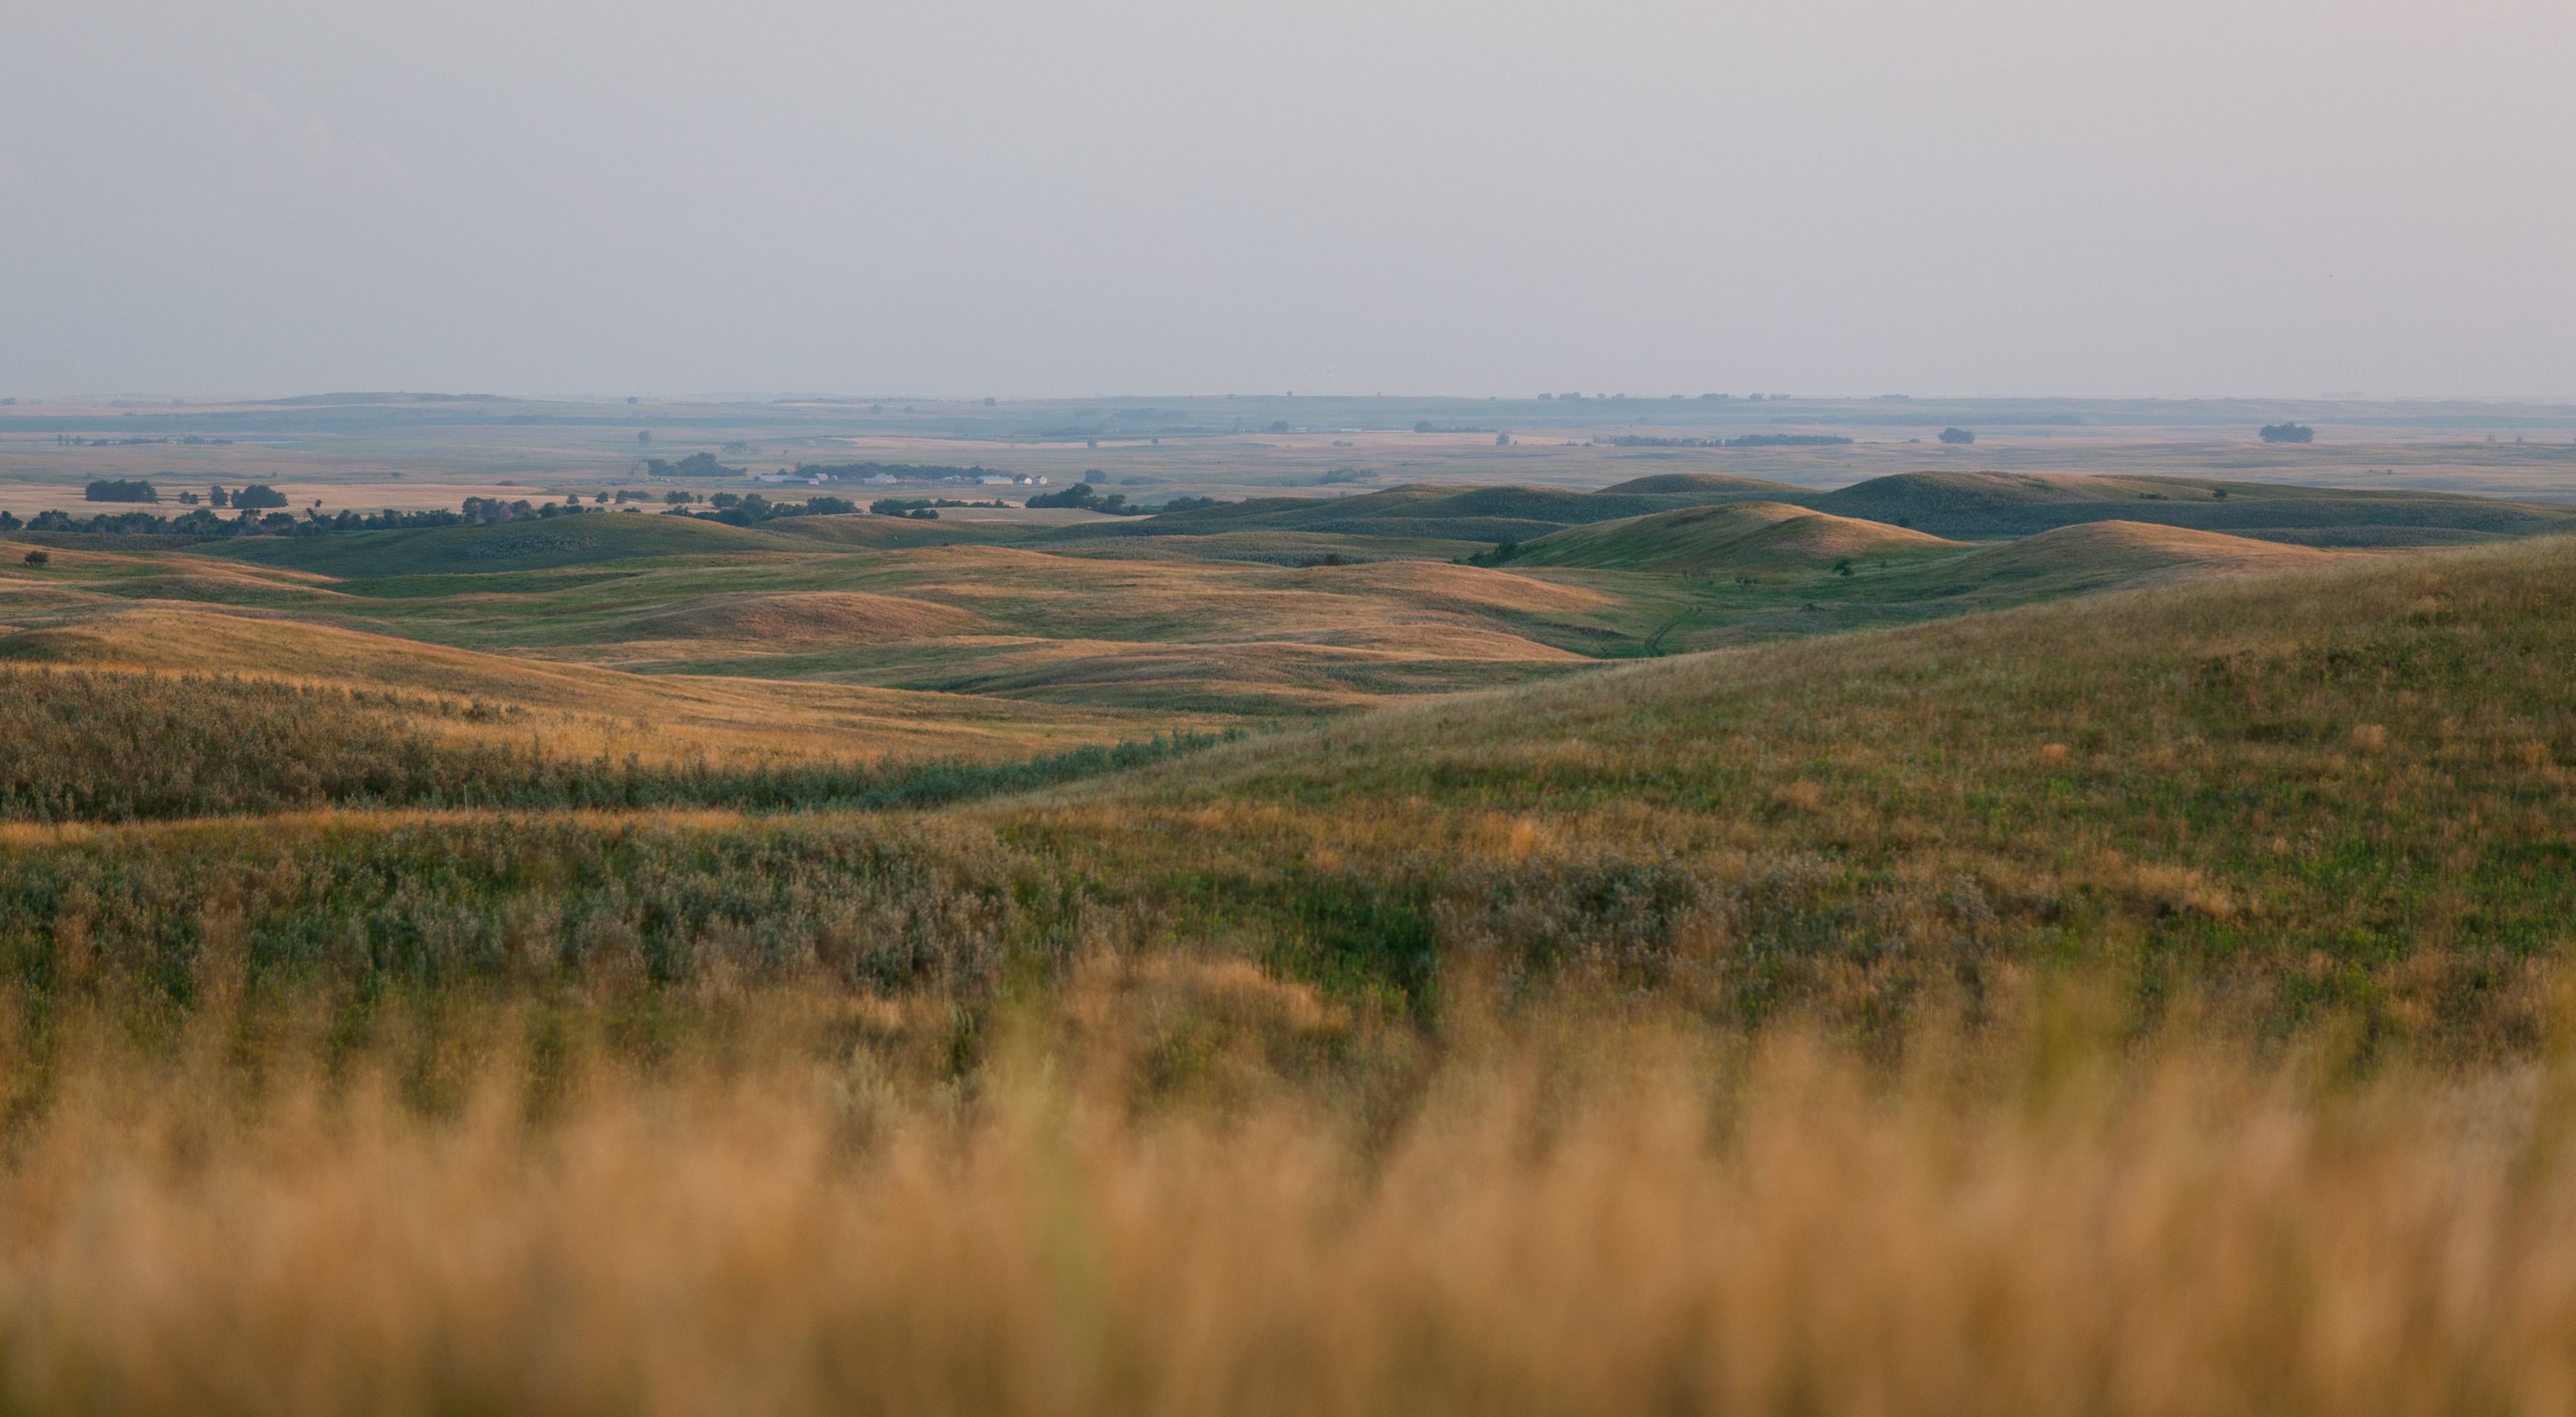 Landscape view of Davis Ranch in North Dakota